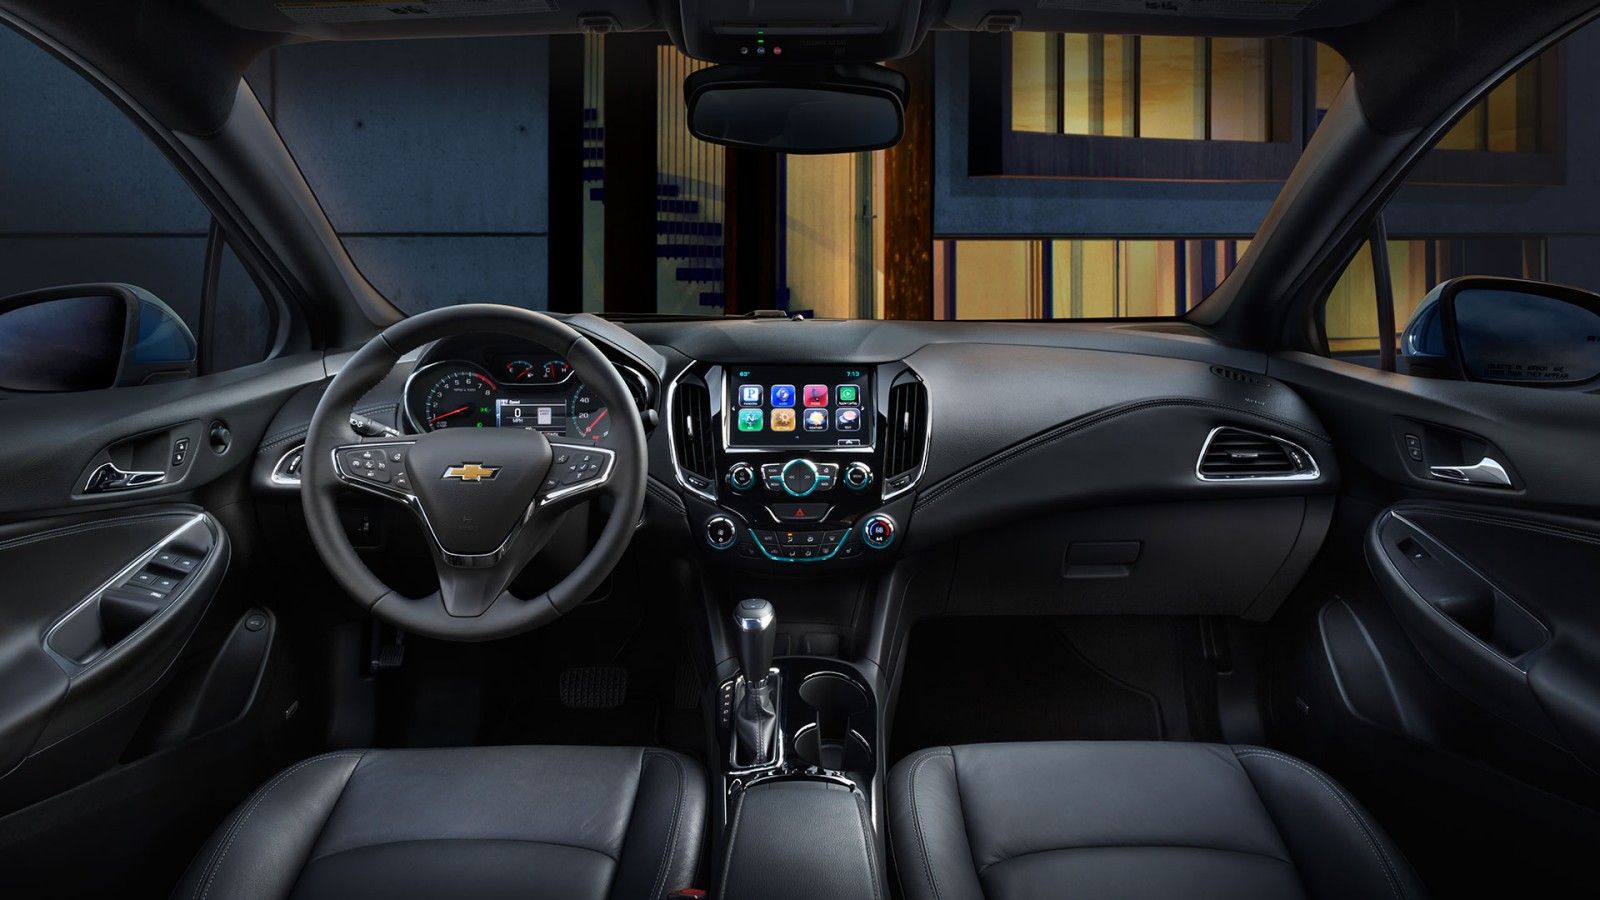 Chevrolet Cruze interior - Cockpit